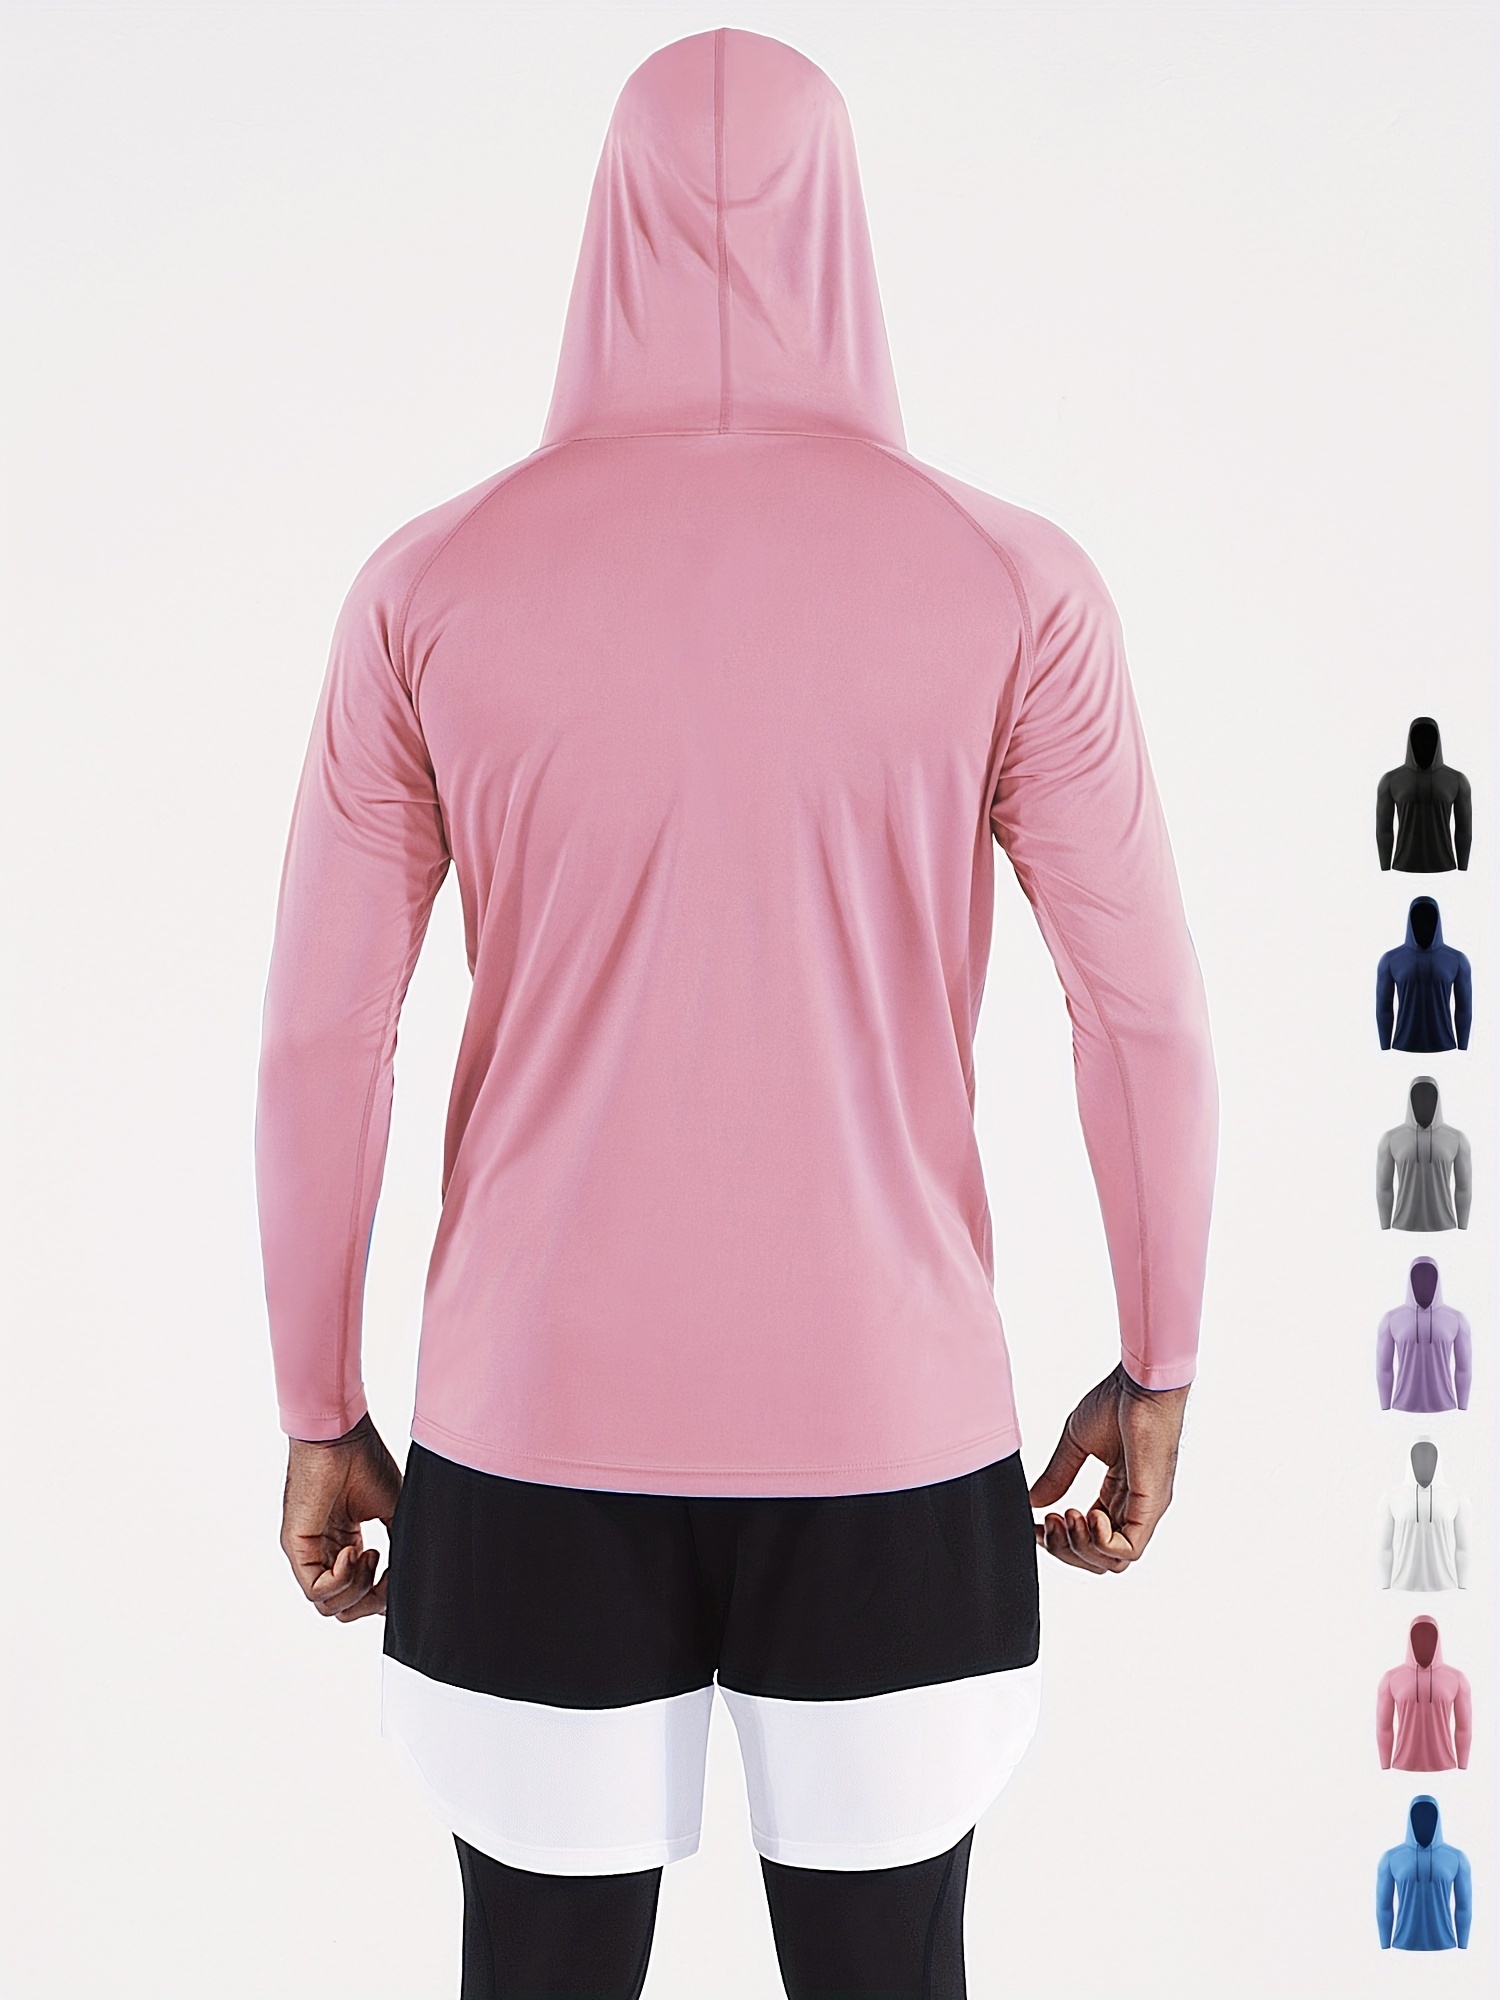 M MAROAUT Women's Long Sleeve Hoodies Sun Protection Hiking Shirts Cooling  Pink XL